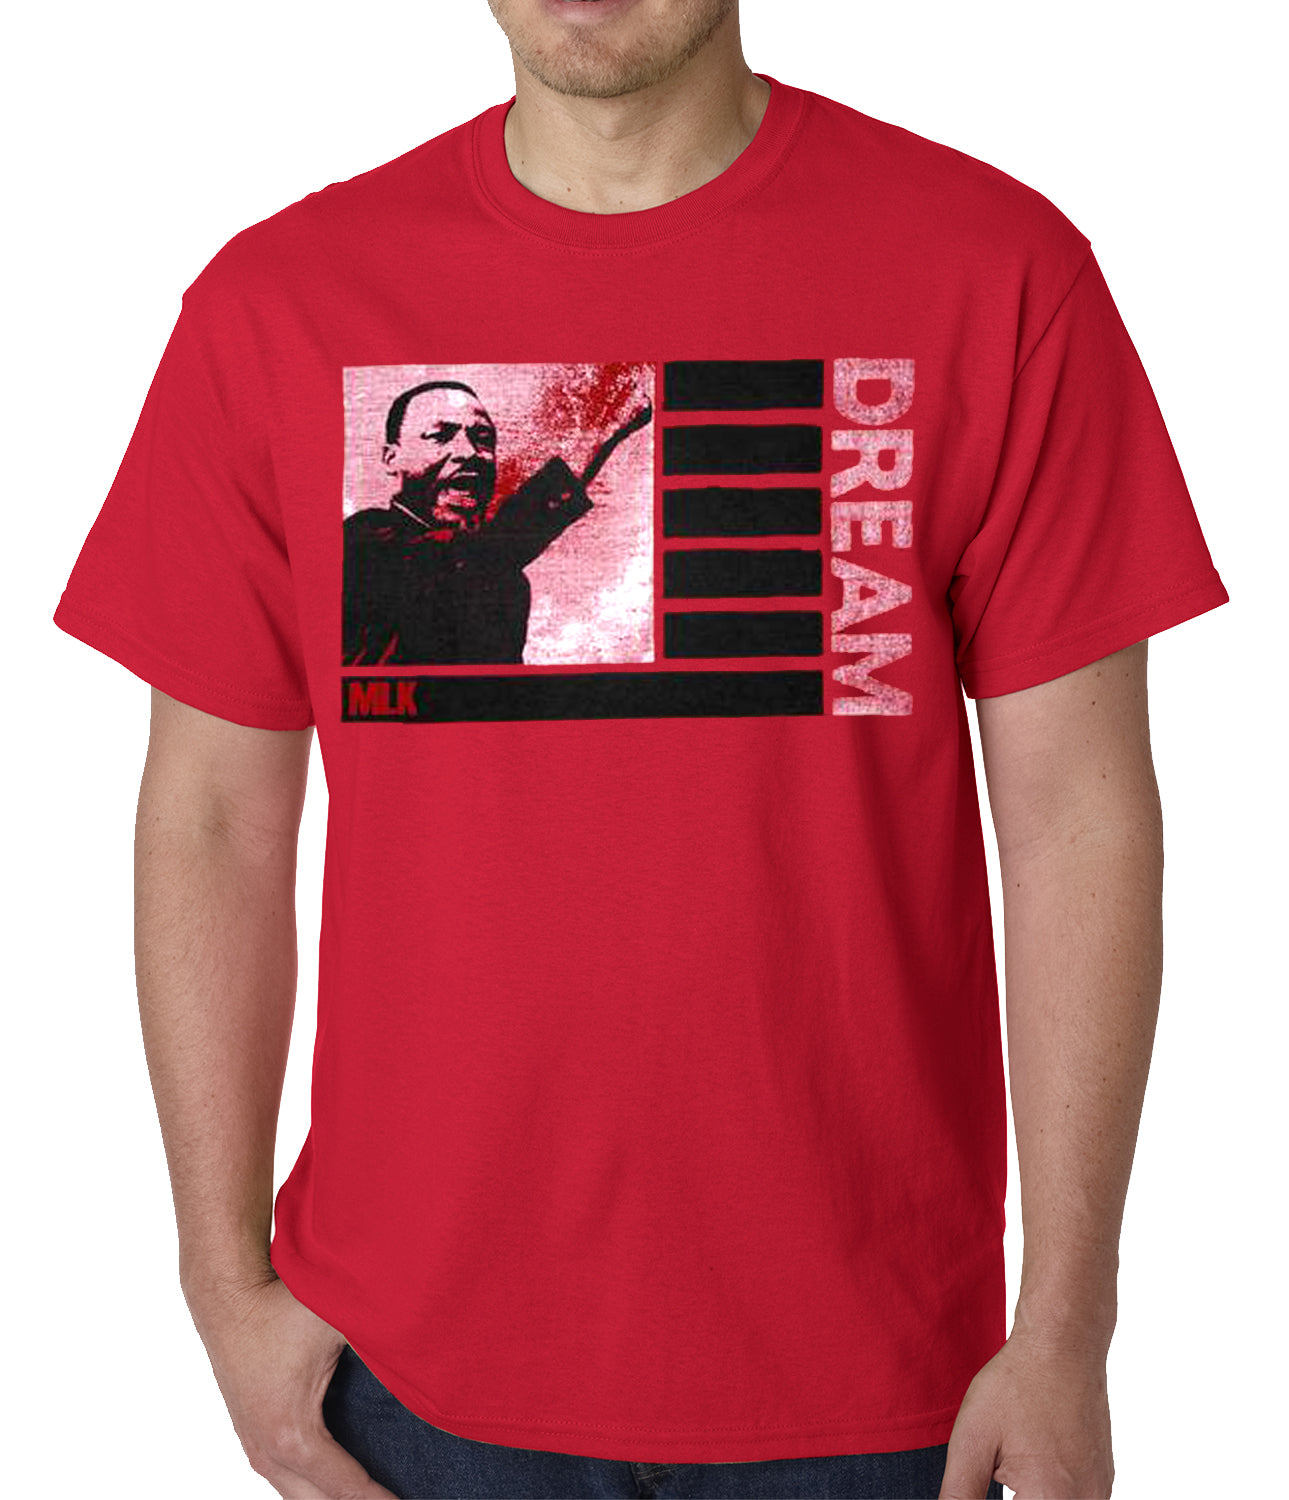 M.L.K On Dreamville T-shirt – El'Cesart